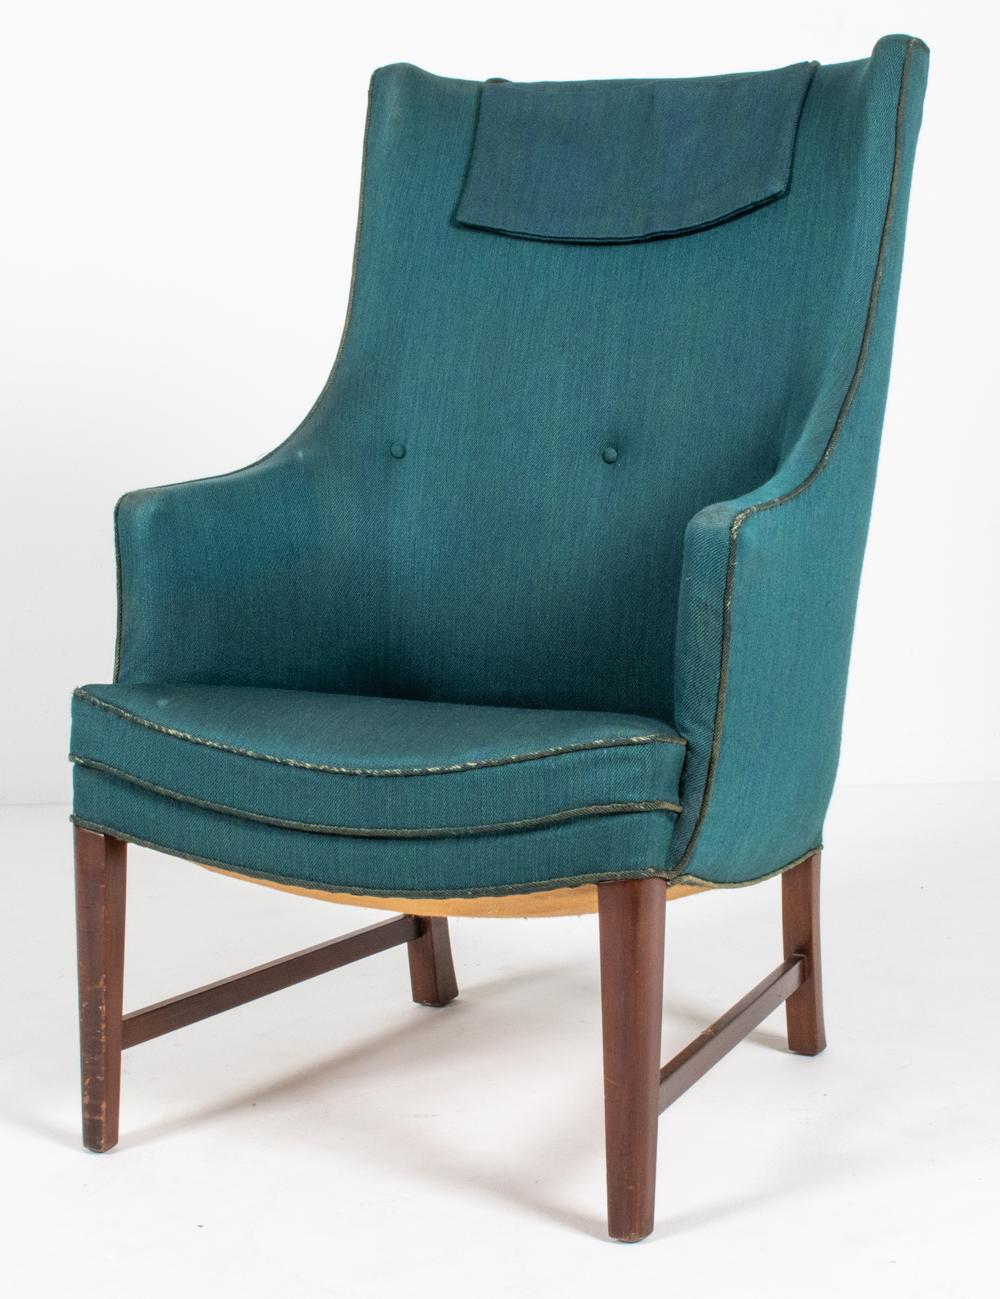 Scandinavian Modern Frits Henningsen Danish Highback Lounge Chair, c. 1940's For Sale